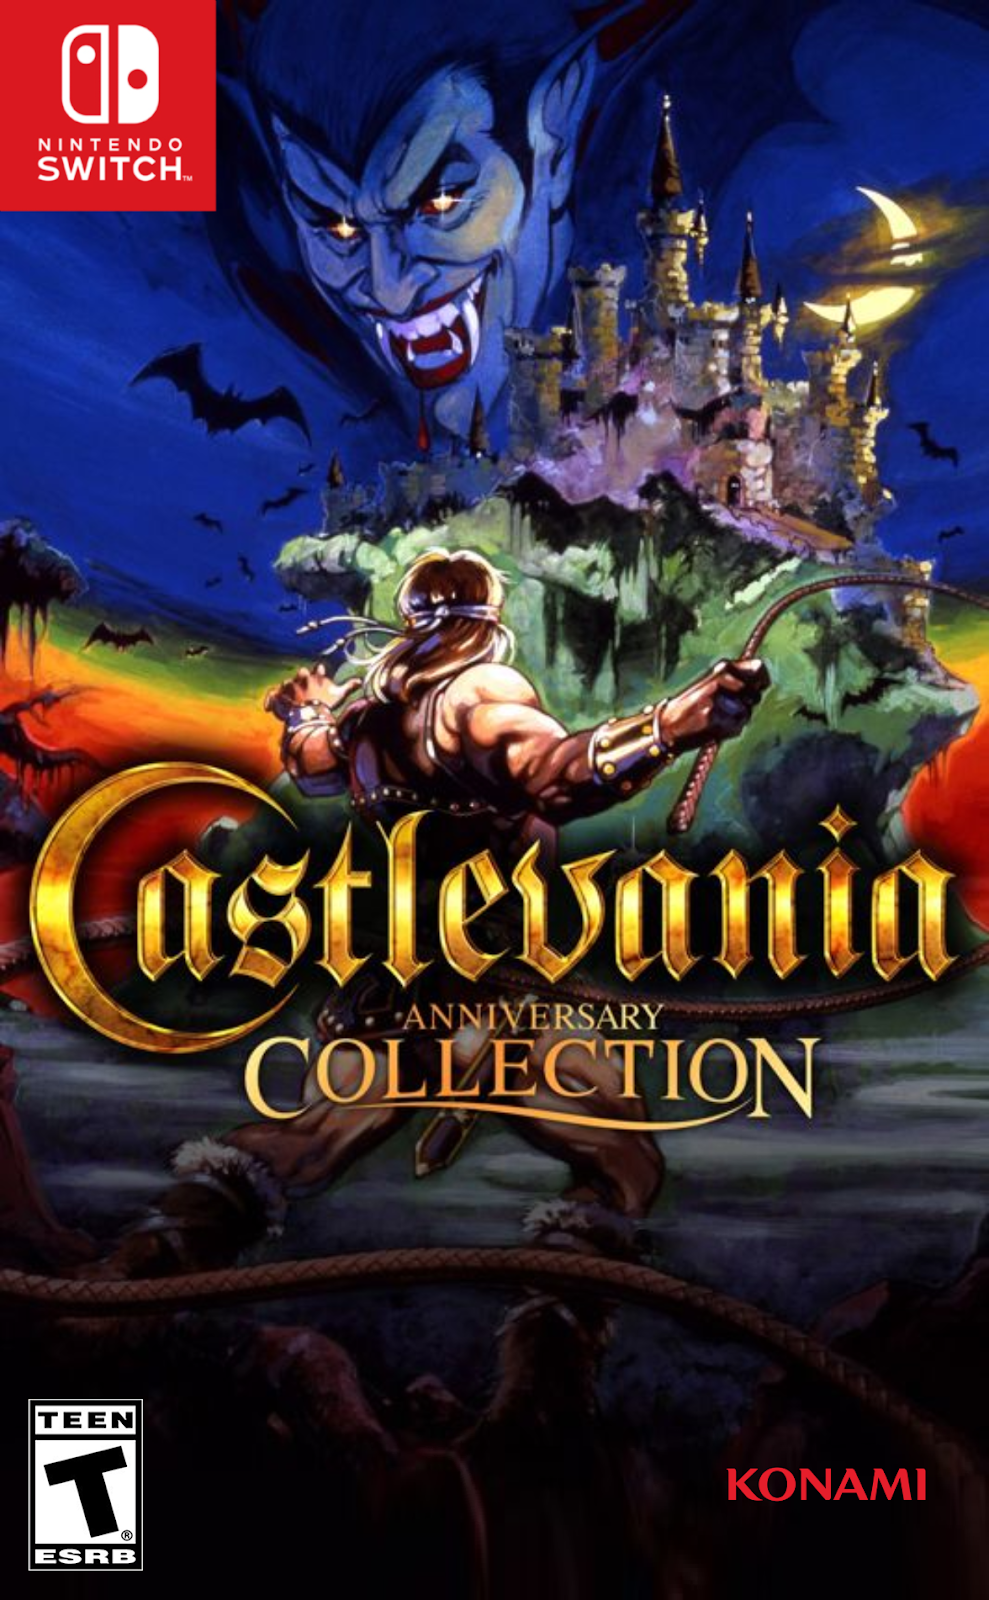 Castlevania Anniversary Collection - Cover Art